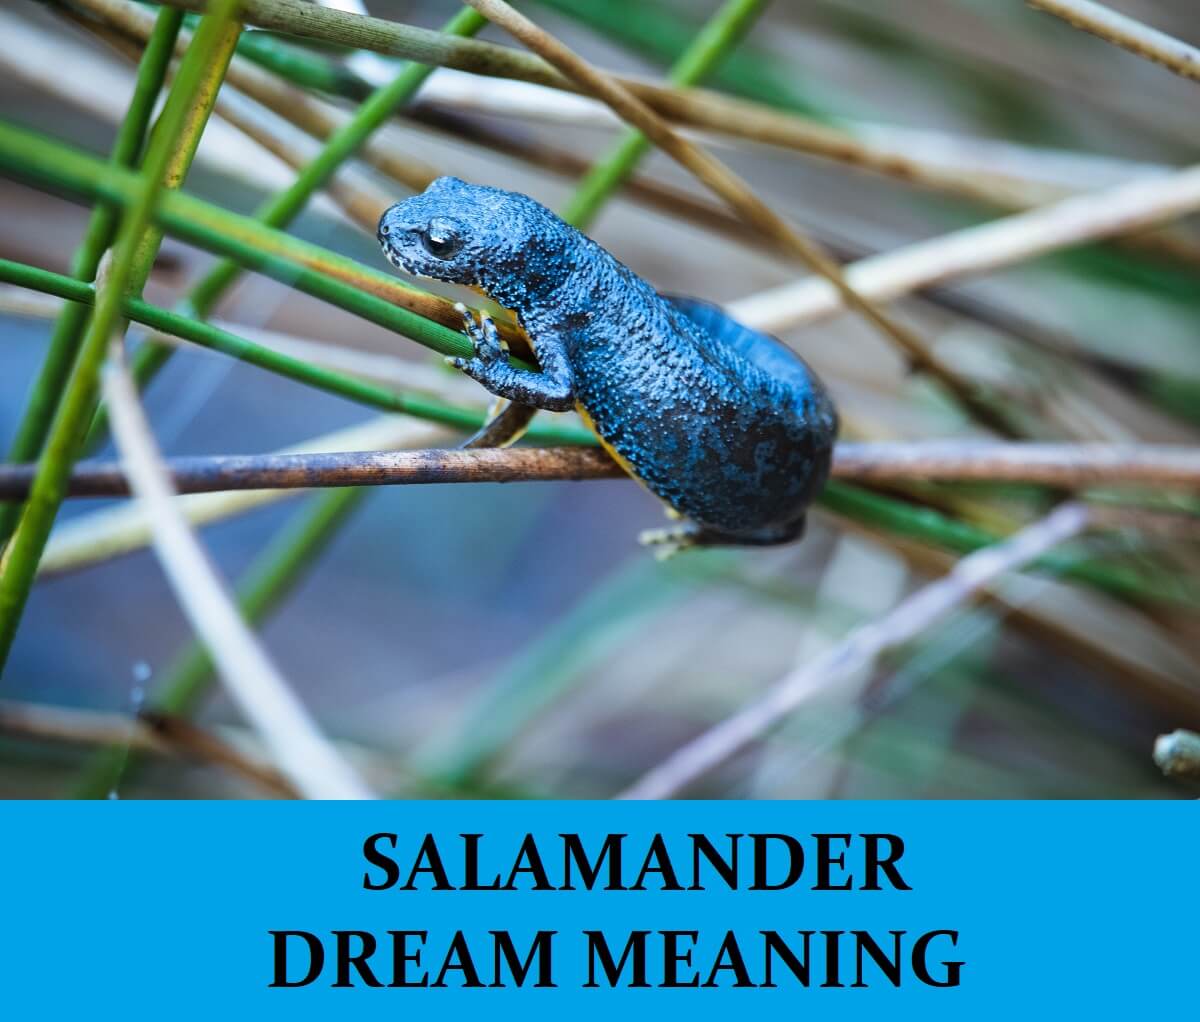 Dream About Salamanders